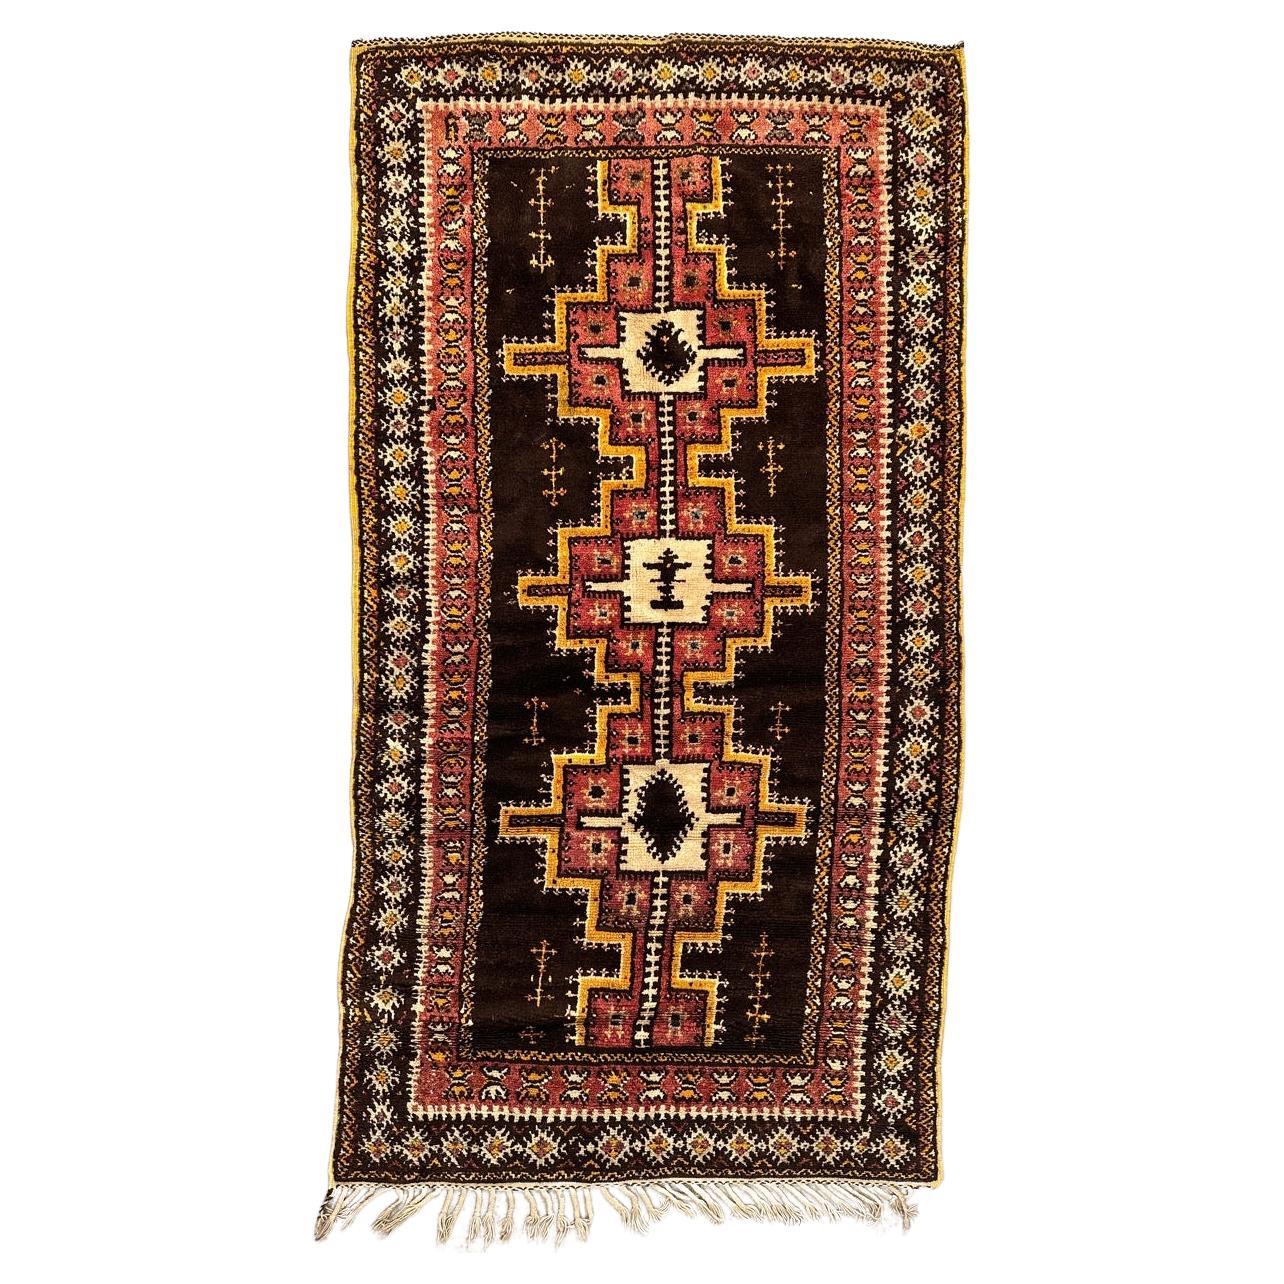 Bobyrug's Nice Mid Century Moroccan Berbere Rug (tapis berbère marocain du milieu du siècle)